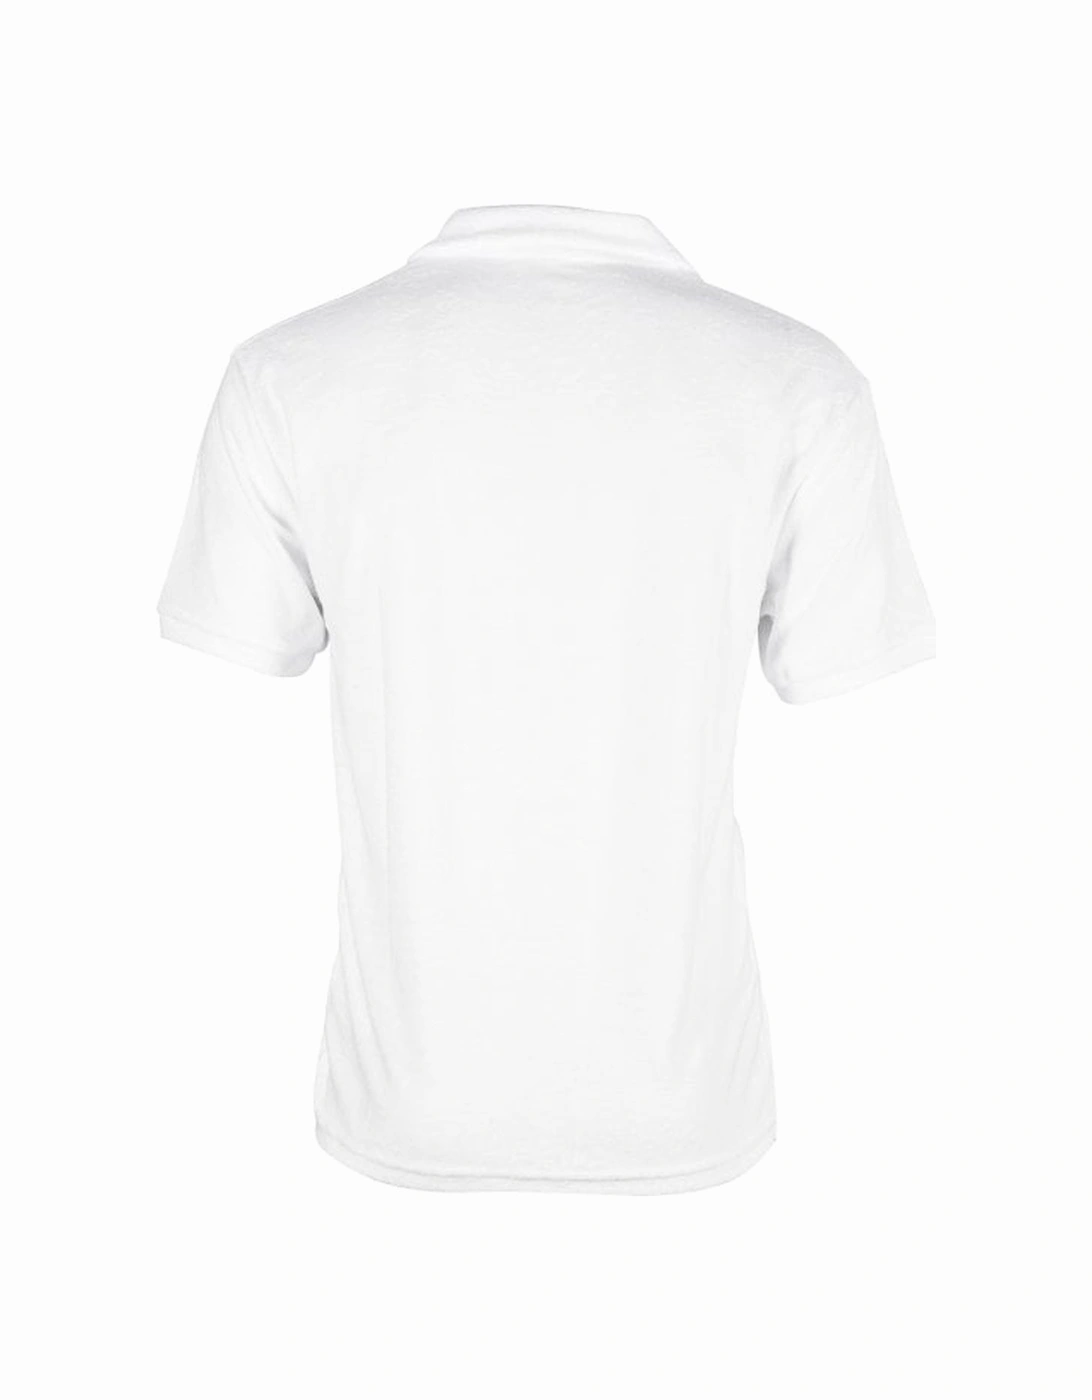 Towelling Polo Shirt, White